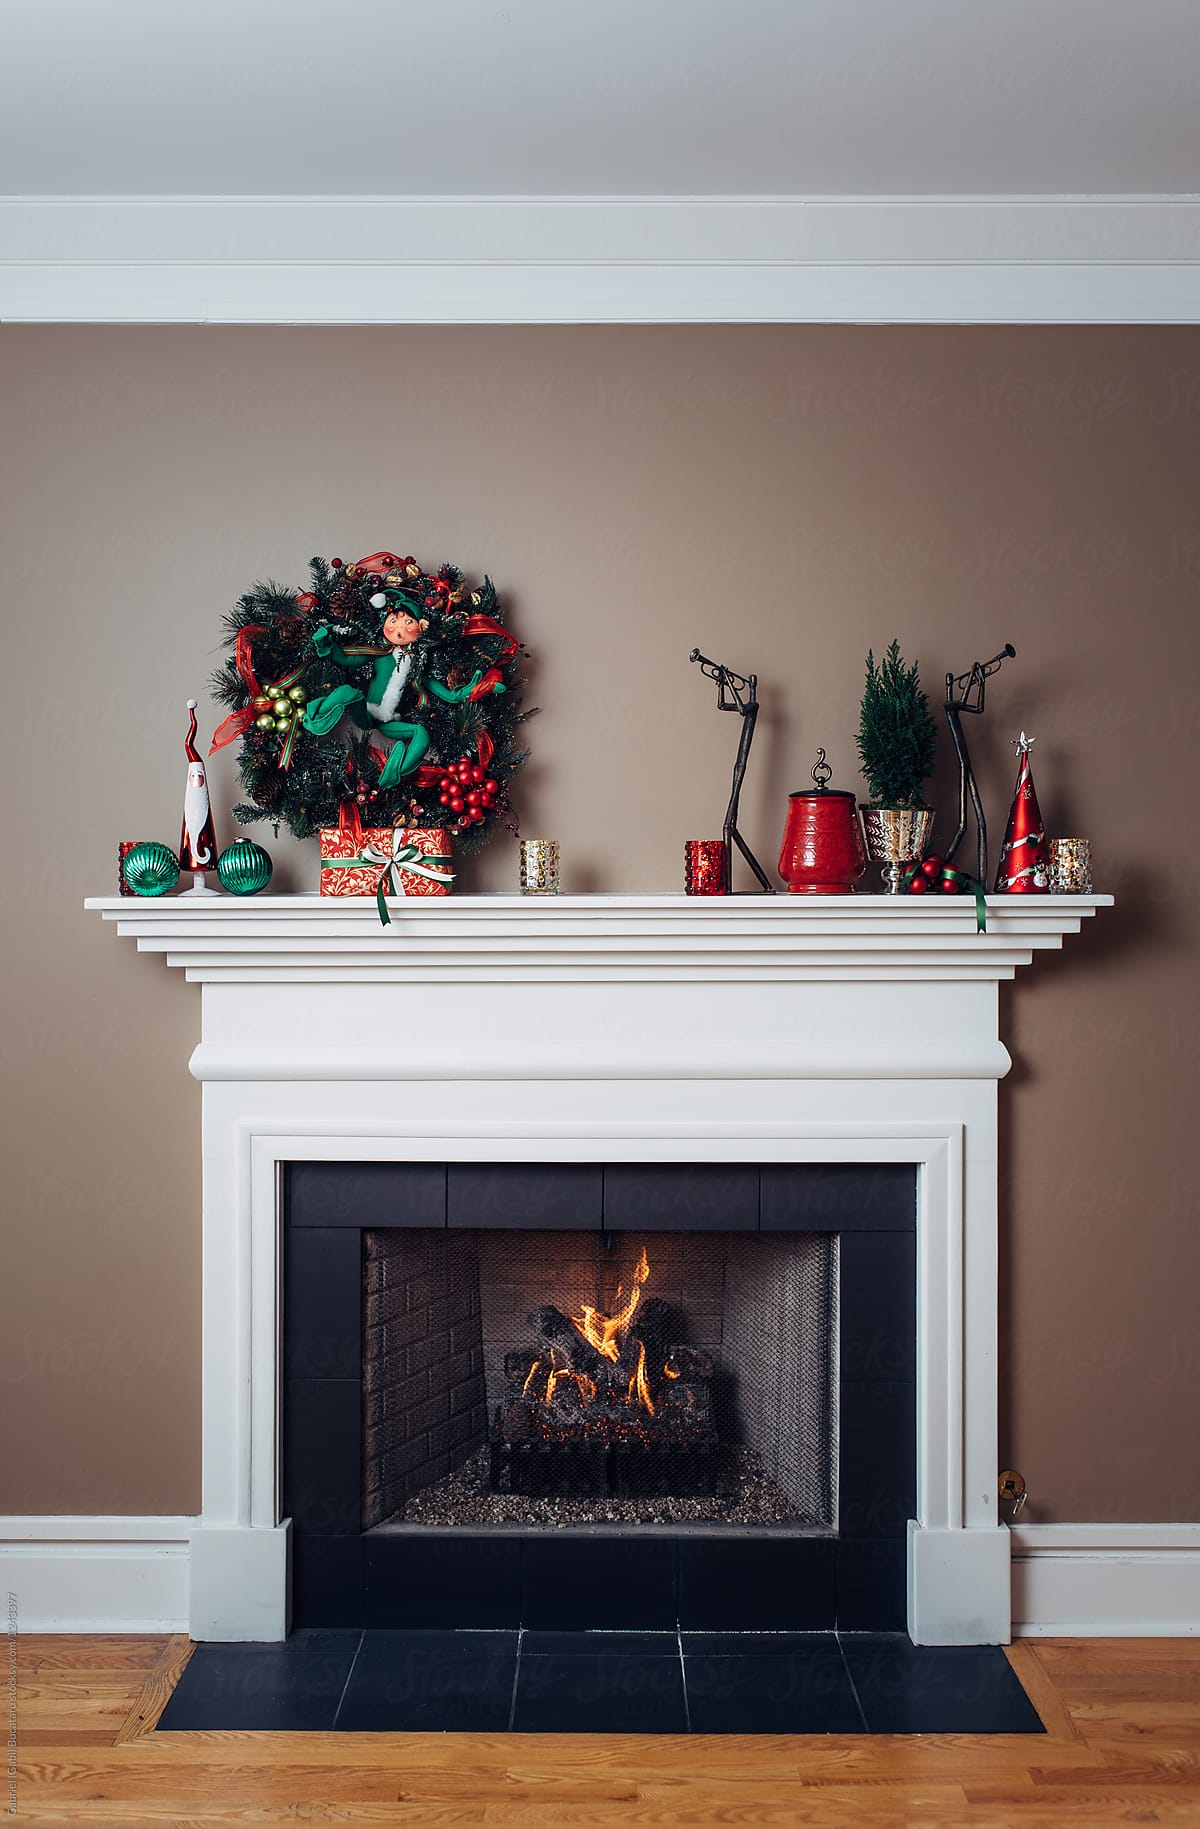 Christmas theme decorated fireplace mantel